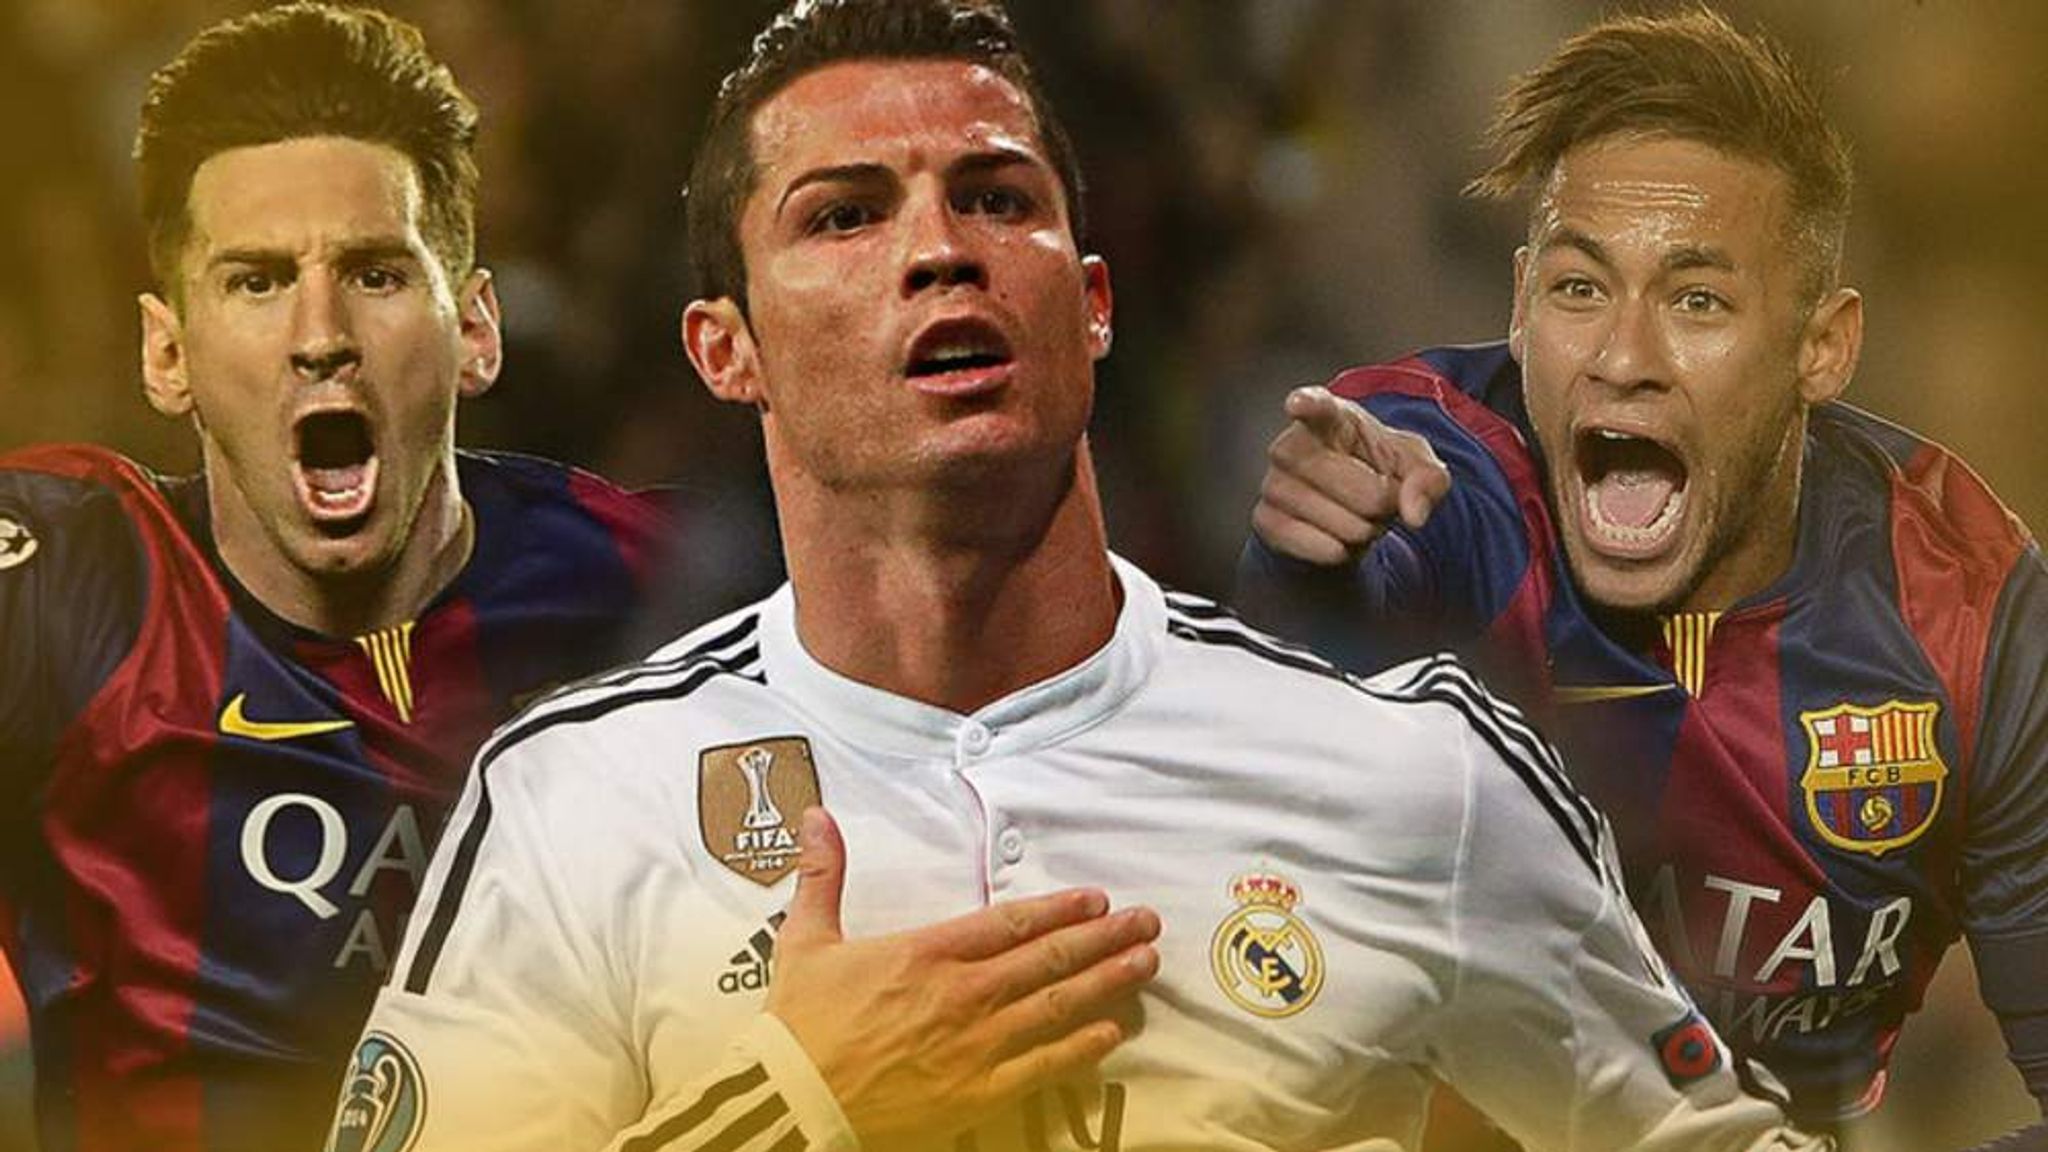 GOAL - The Ballon d'Or three: Leo Messi, Cristiano Ronaldo, Neymar